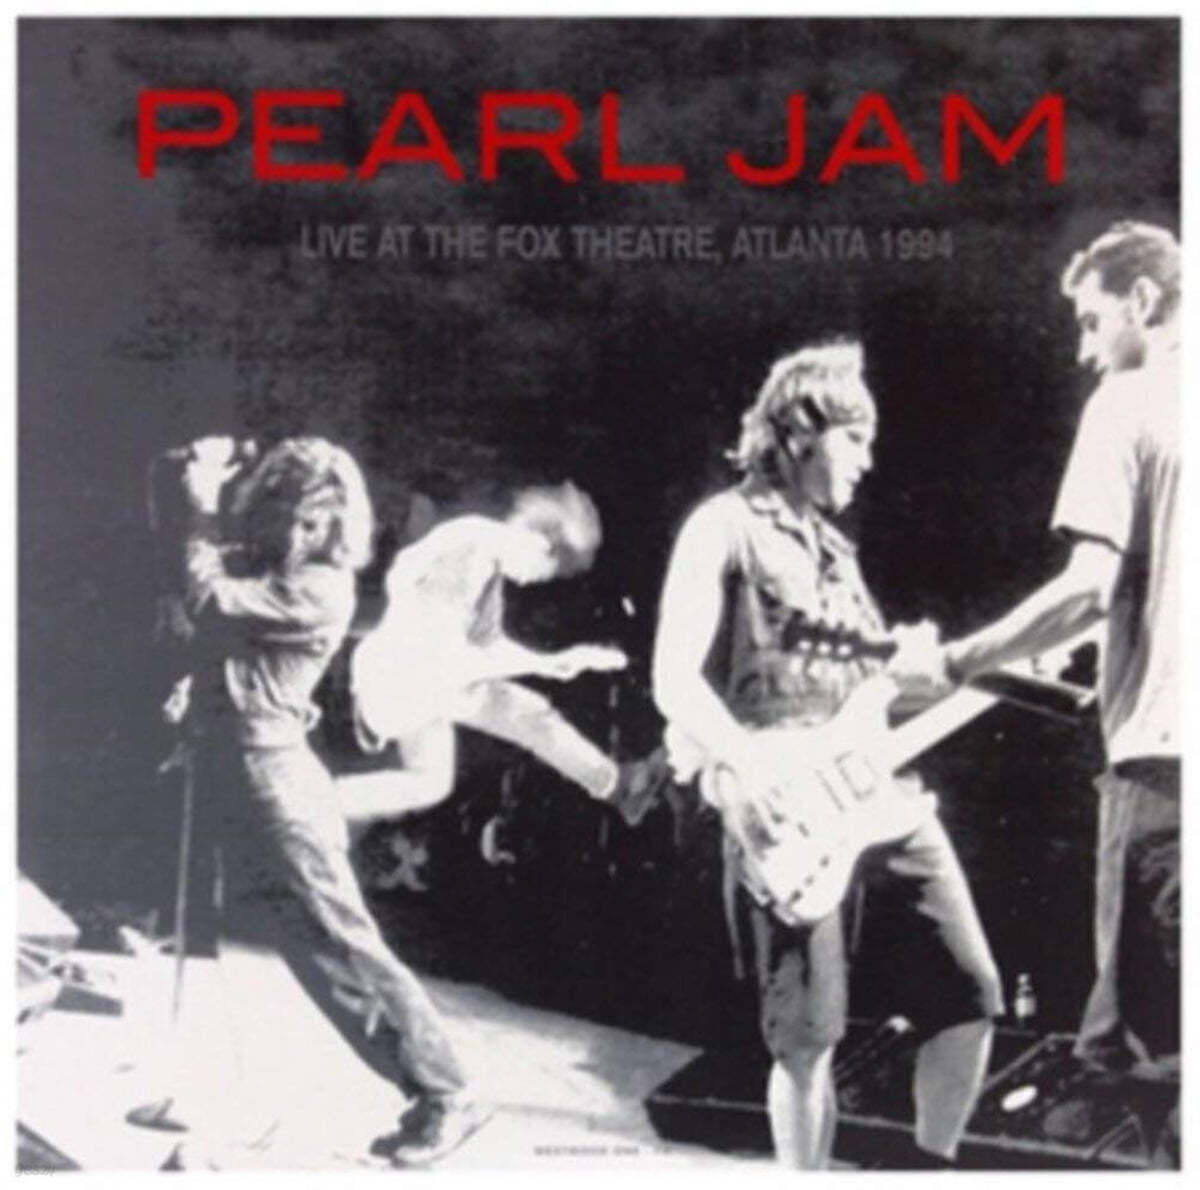 Pearl Jam (펄 잼) - Live At The Fox Theatre, Atlanta 1994 [오렌지 컬러 LP] 